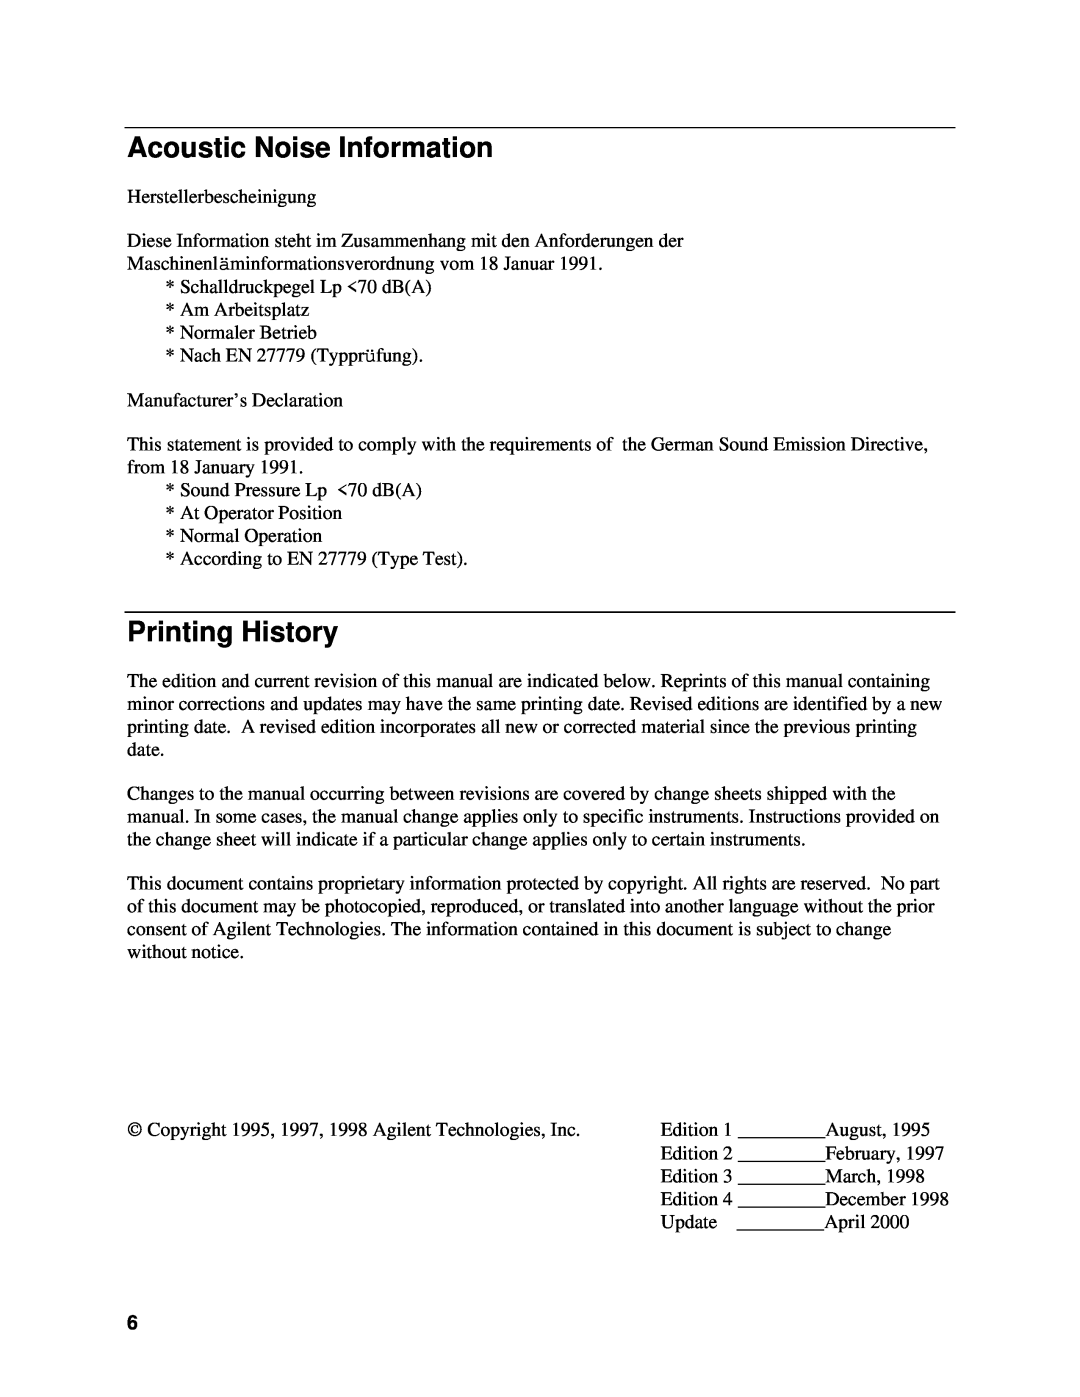 Agilent Technologies 6813B, 6811B, 6812B manual Acoustic Noise Information, Printing History, December 